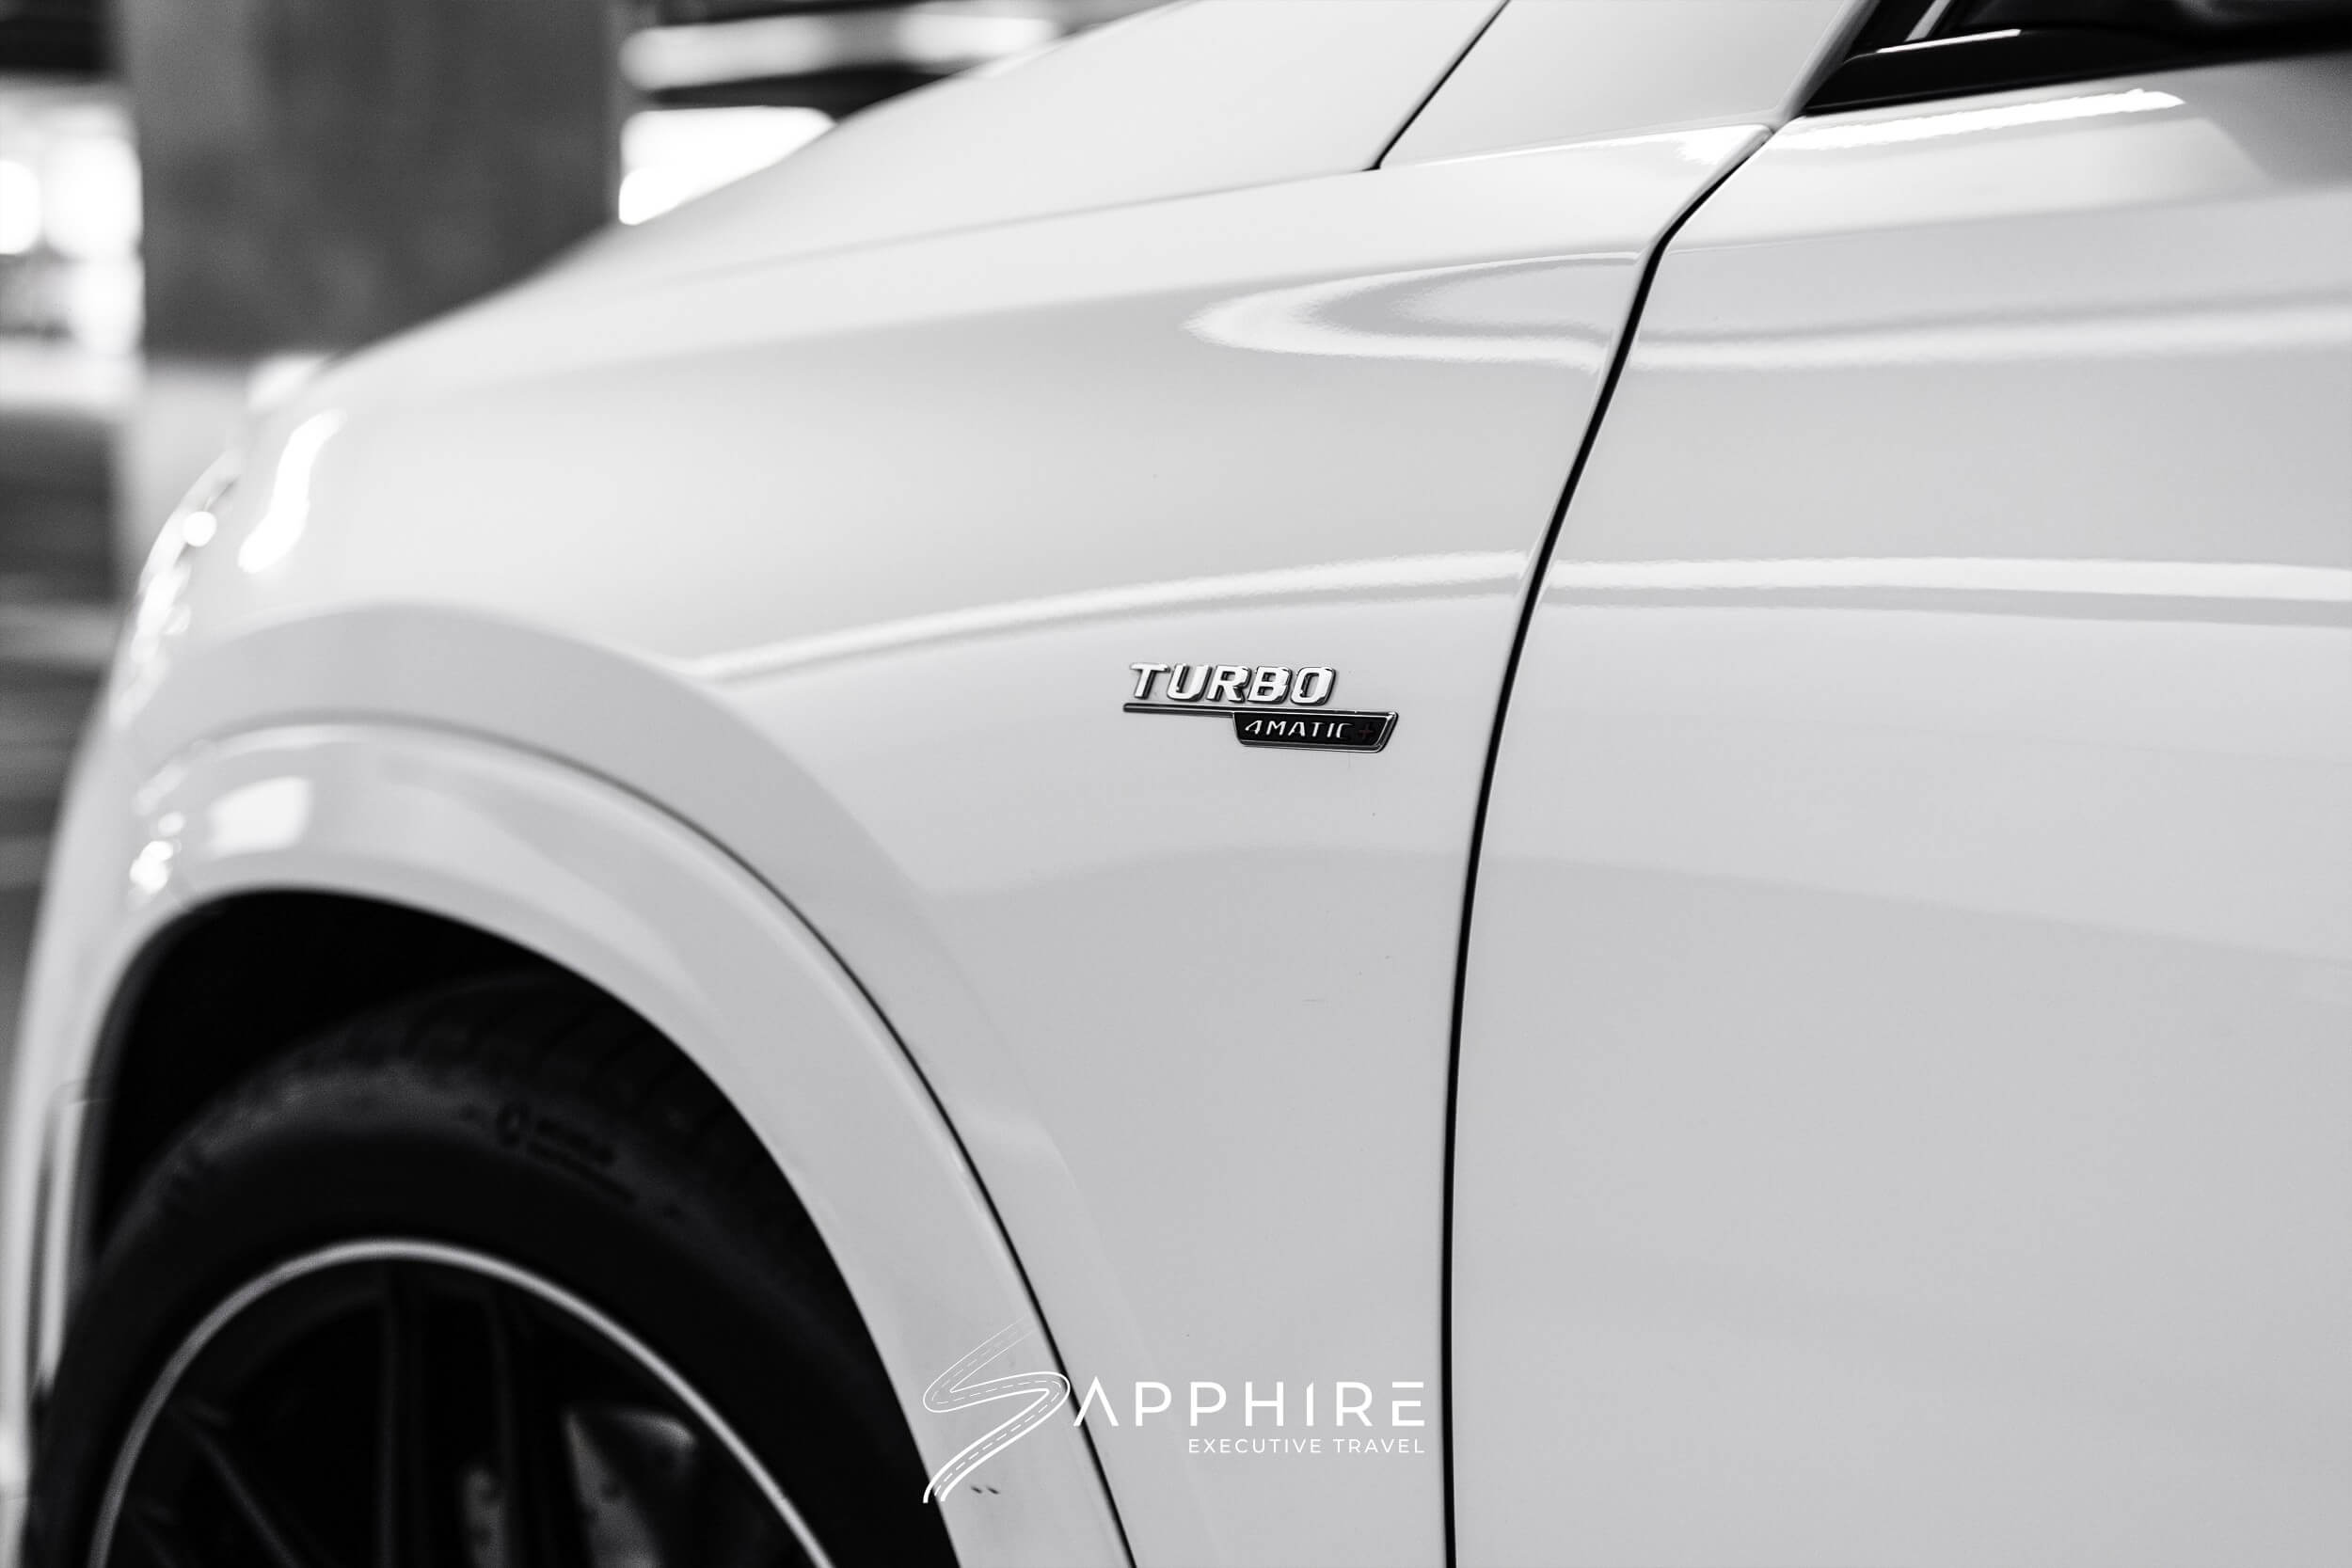 Turbo lettering - White Mercedes Benz GLE53 AMG